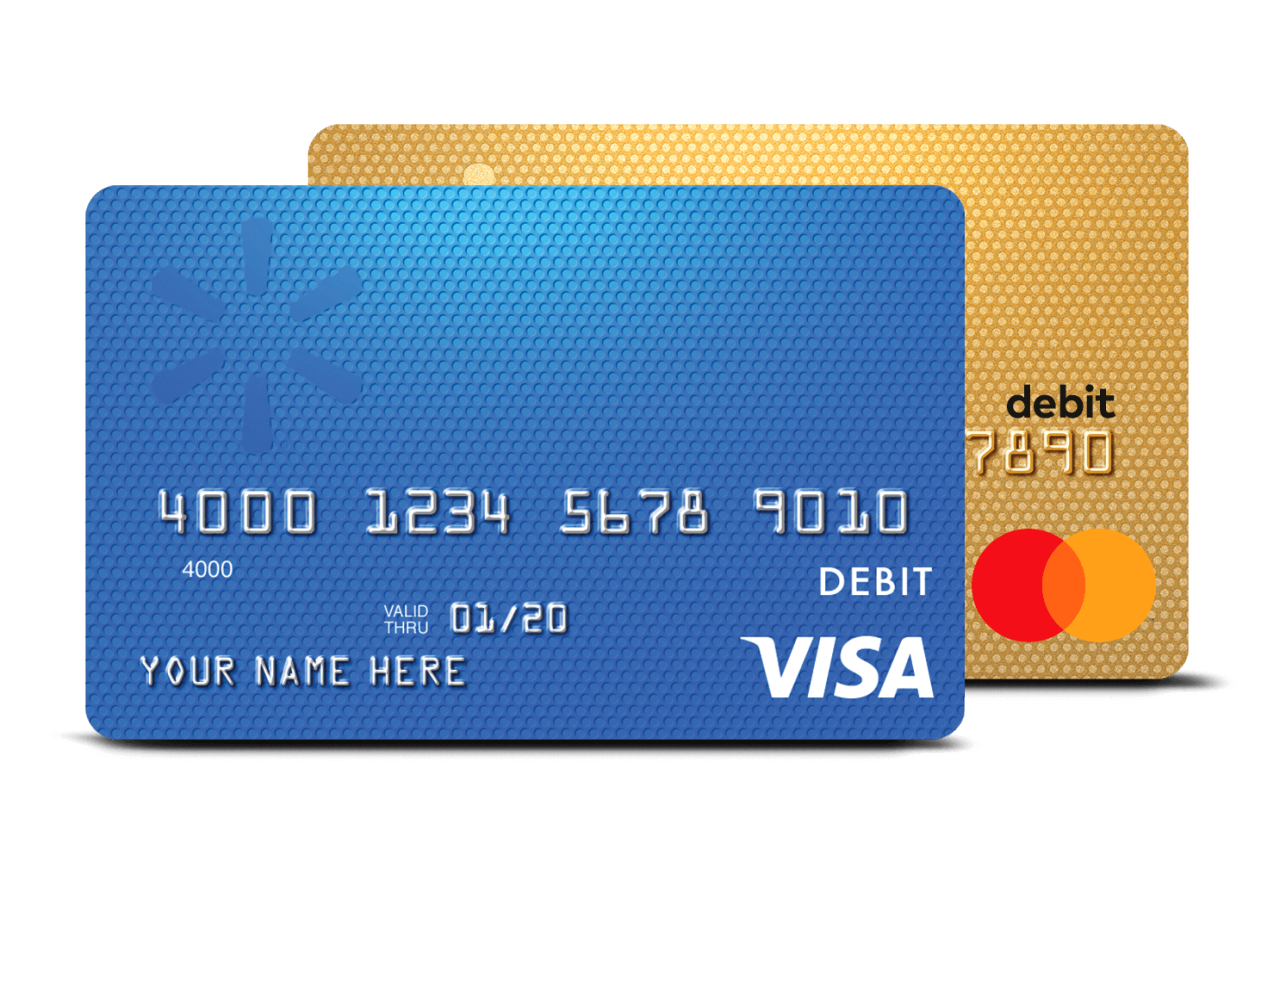 Visa Debit card